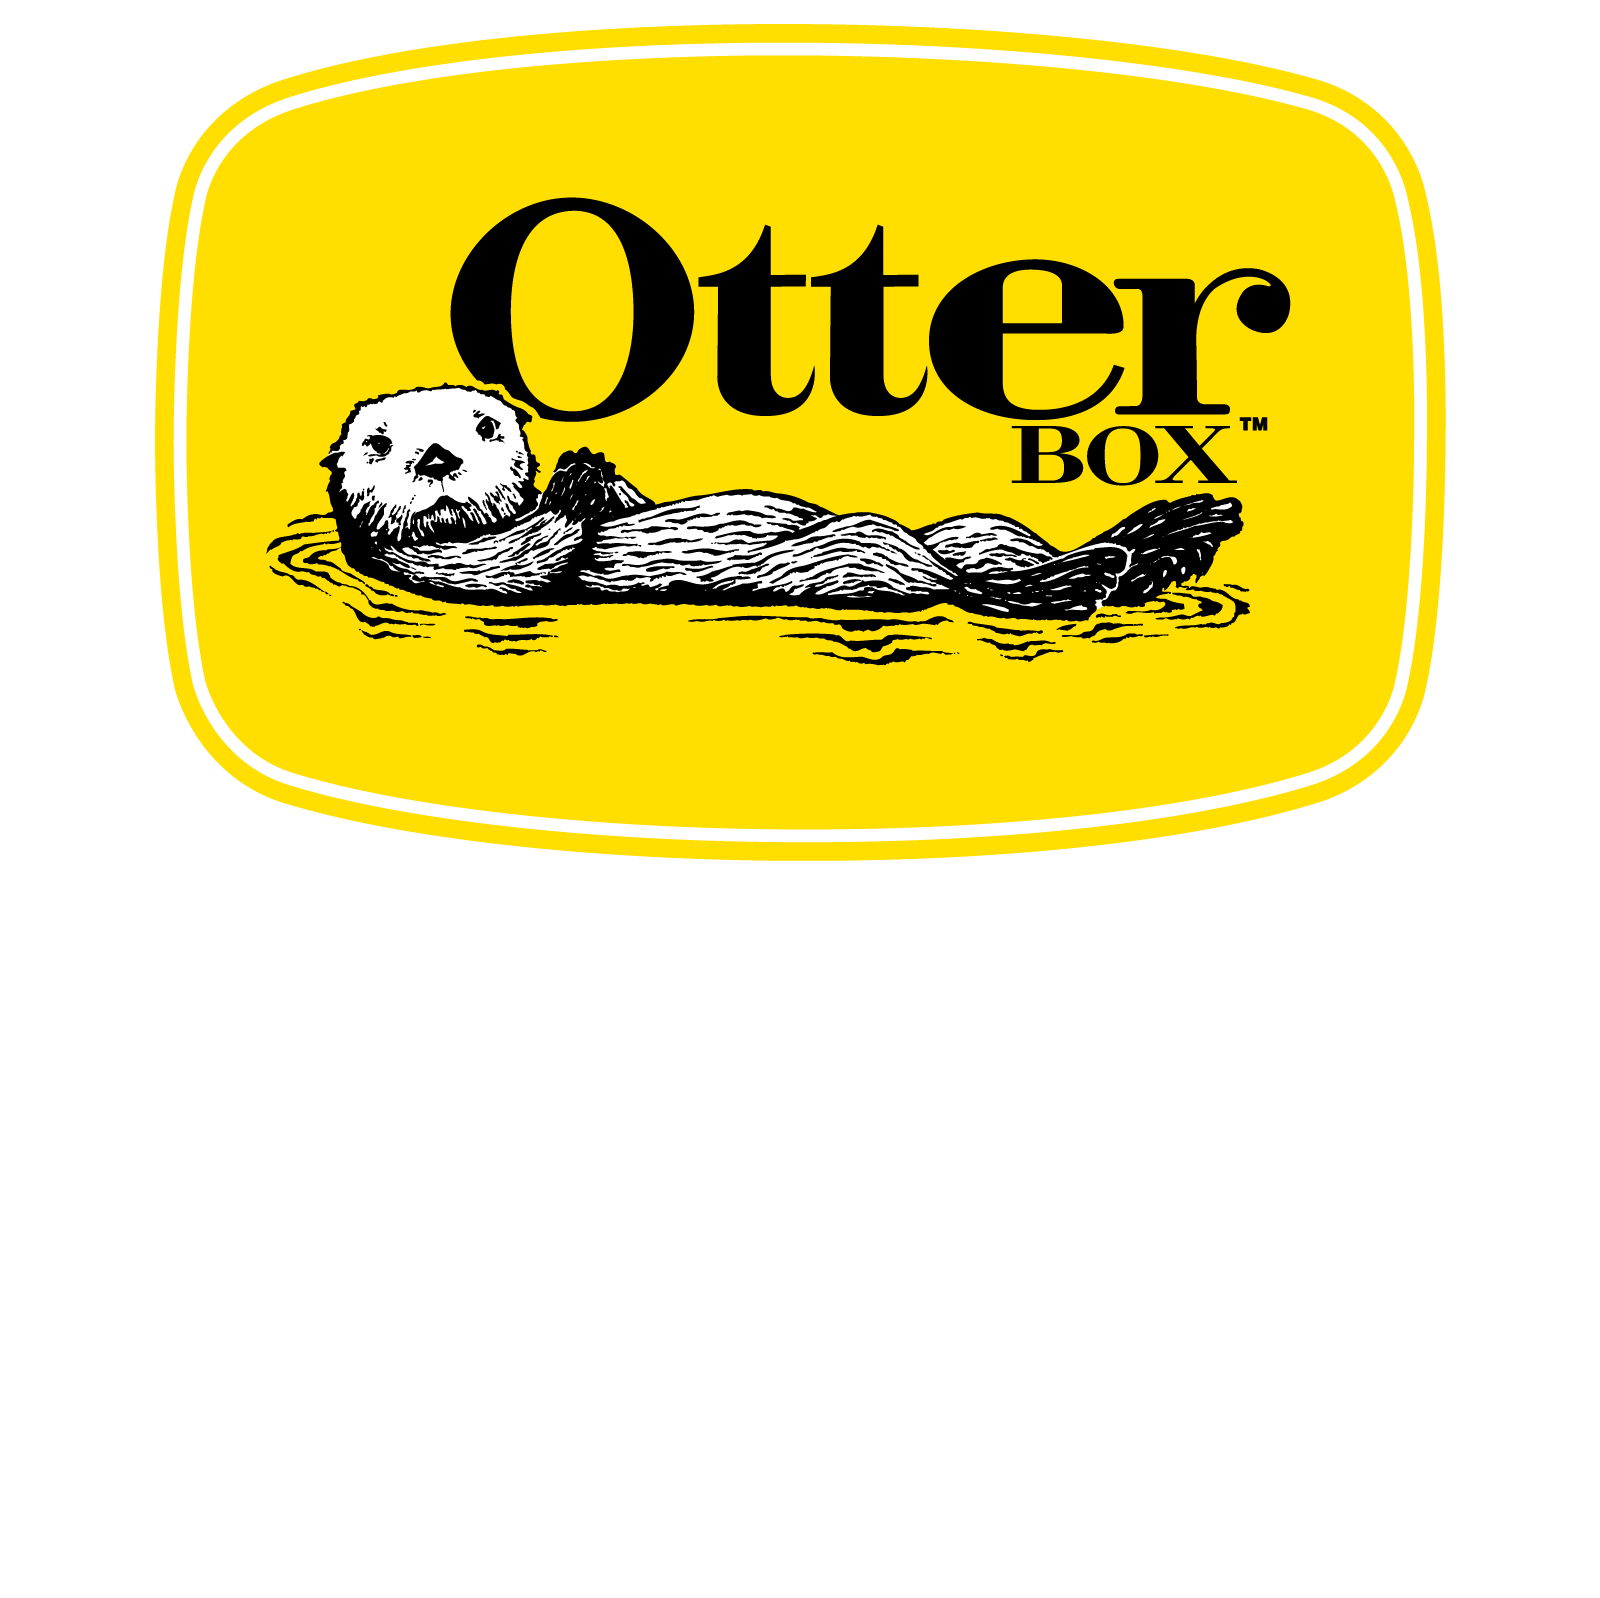 OtterBox Logo - Otterbox